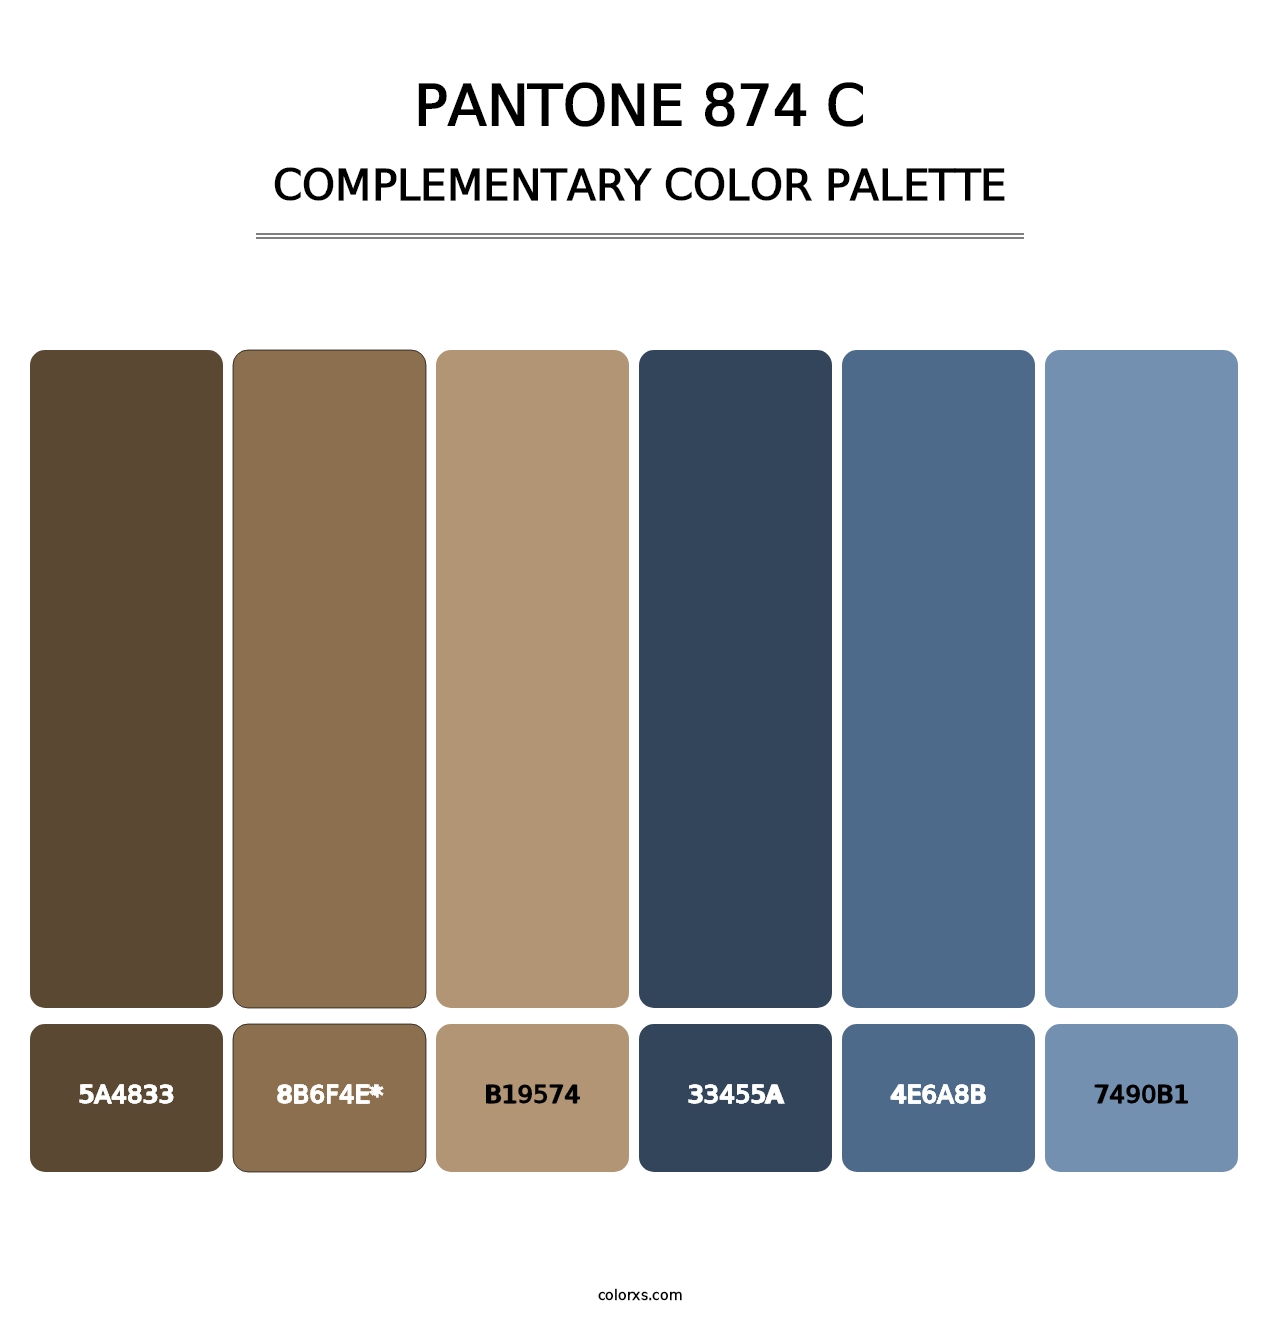 PANTONE 874 C - Complementary Color Palette